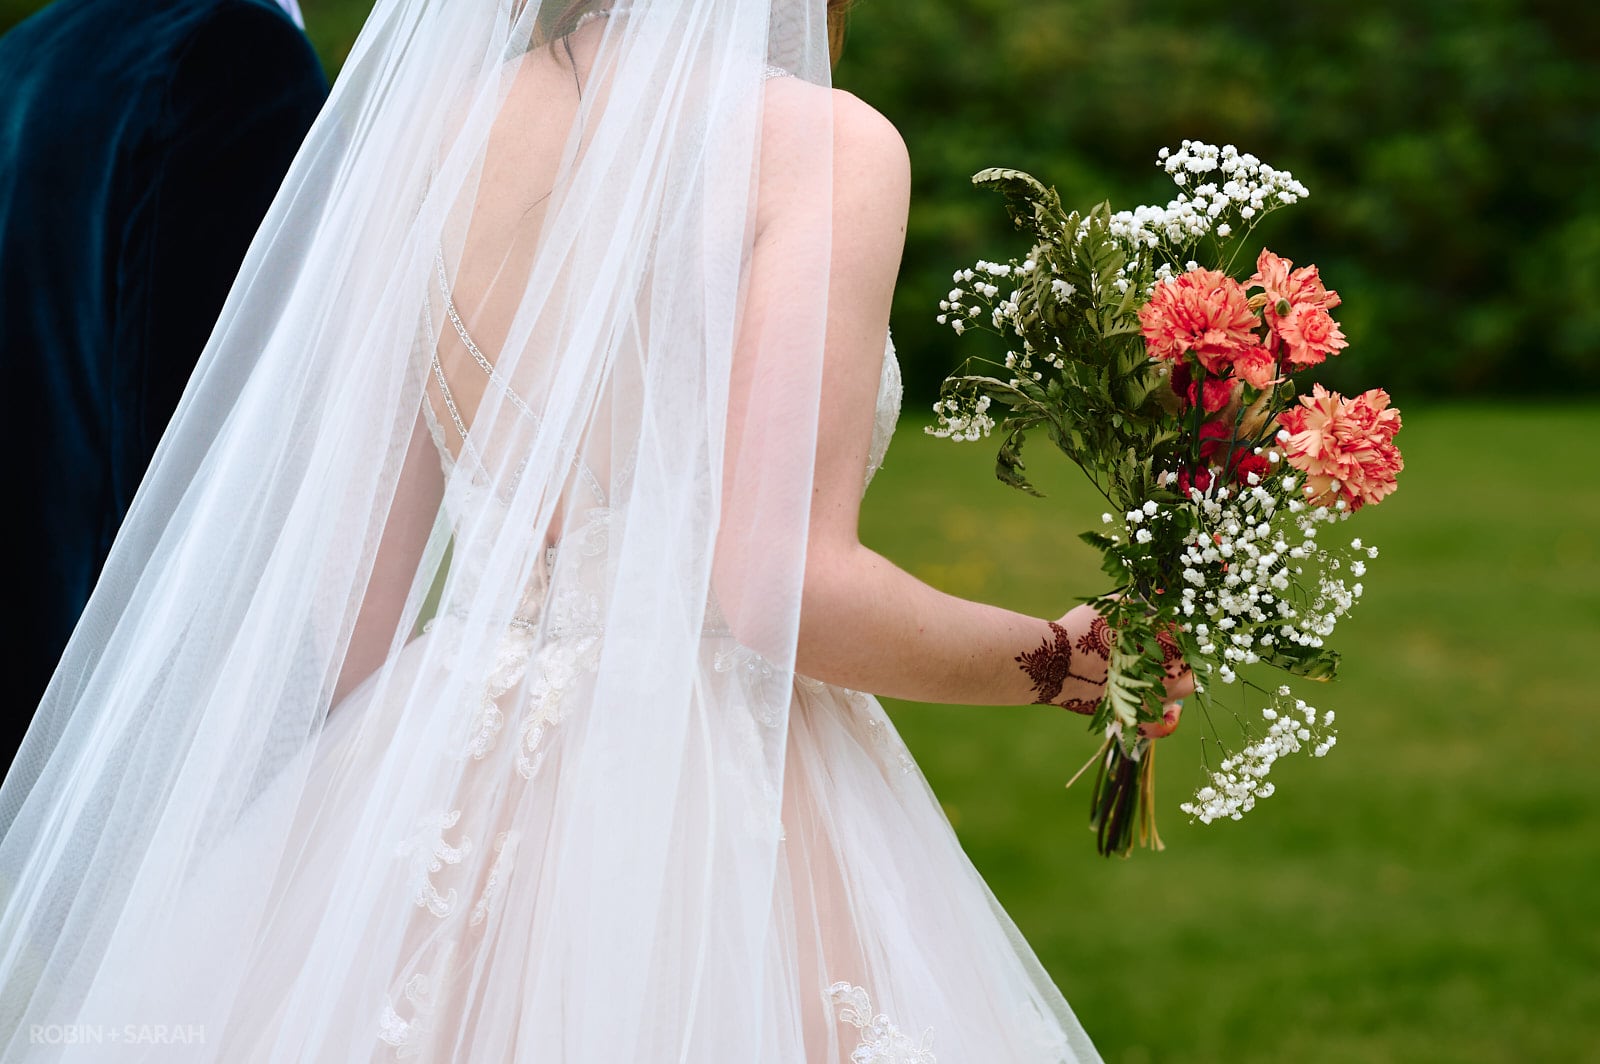 Detail of bride's bouquet as she walks through gardens